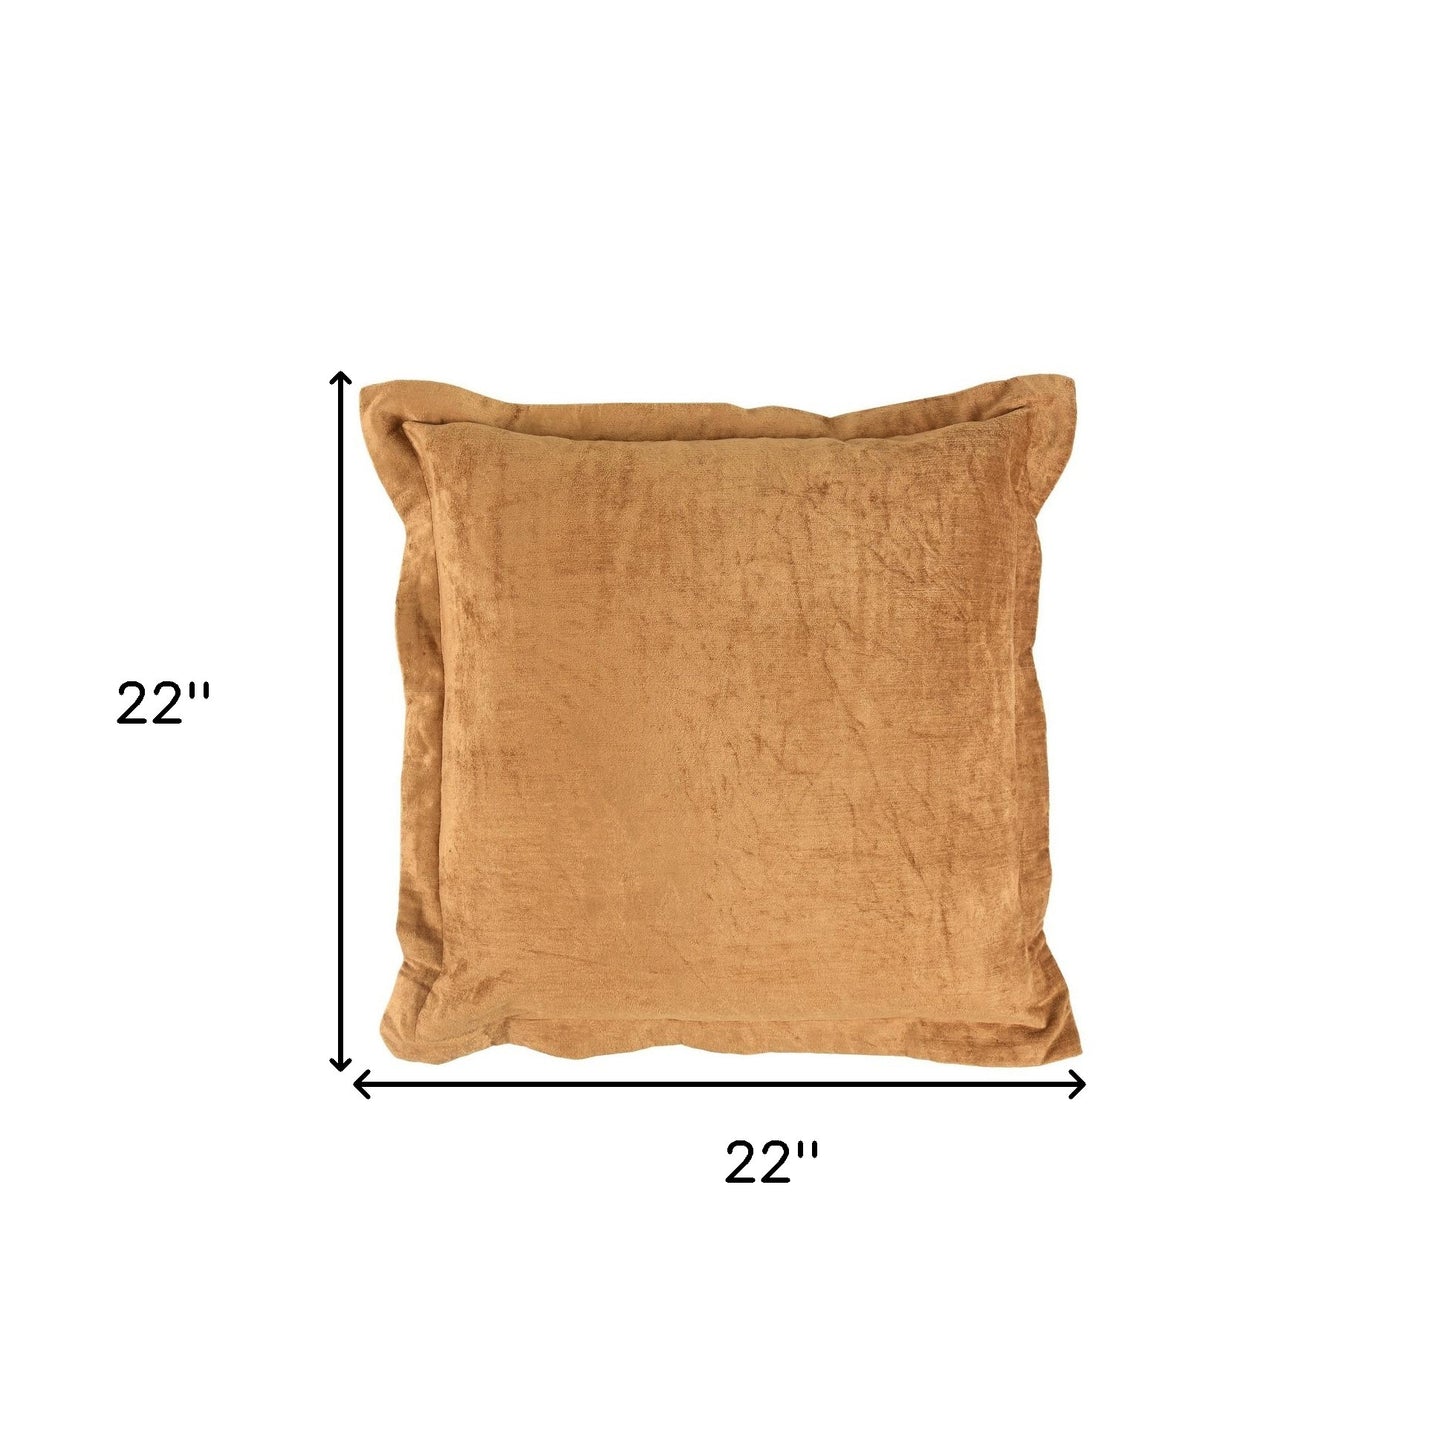 22" X 22" Gold Rayon Zippered Pillow